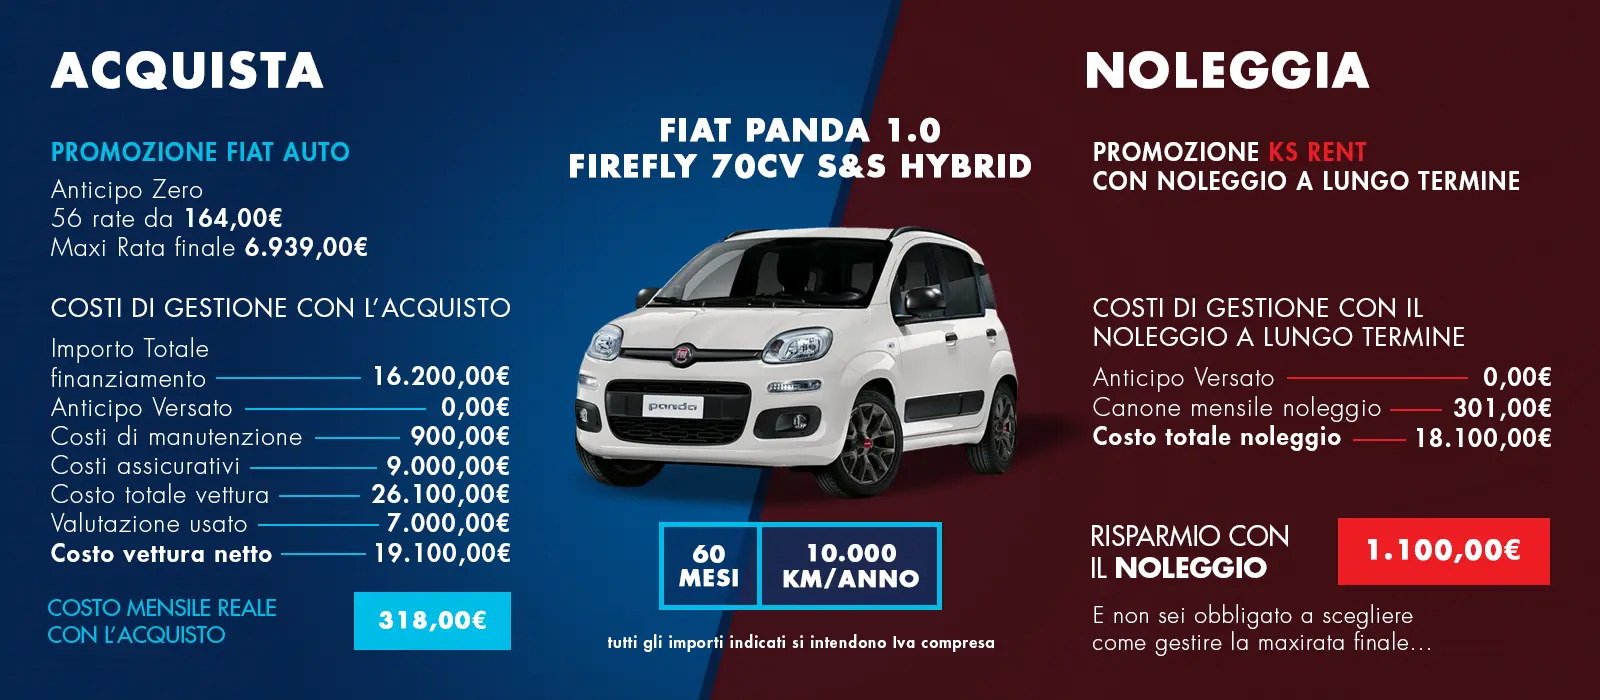 Fiat Panda 1.0 Firefly 70 CV S&S Hybrid